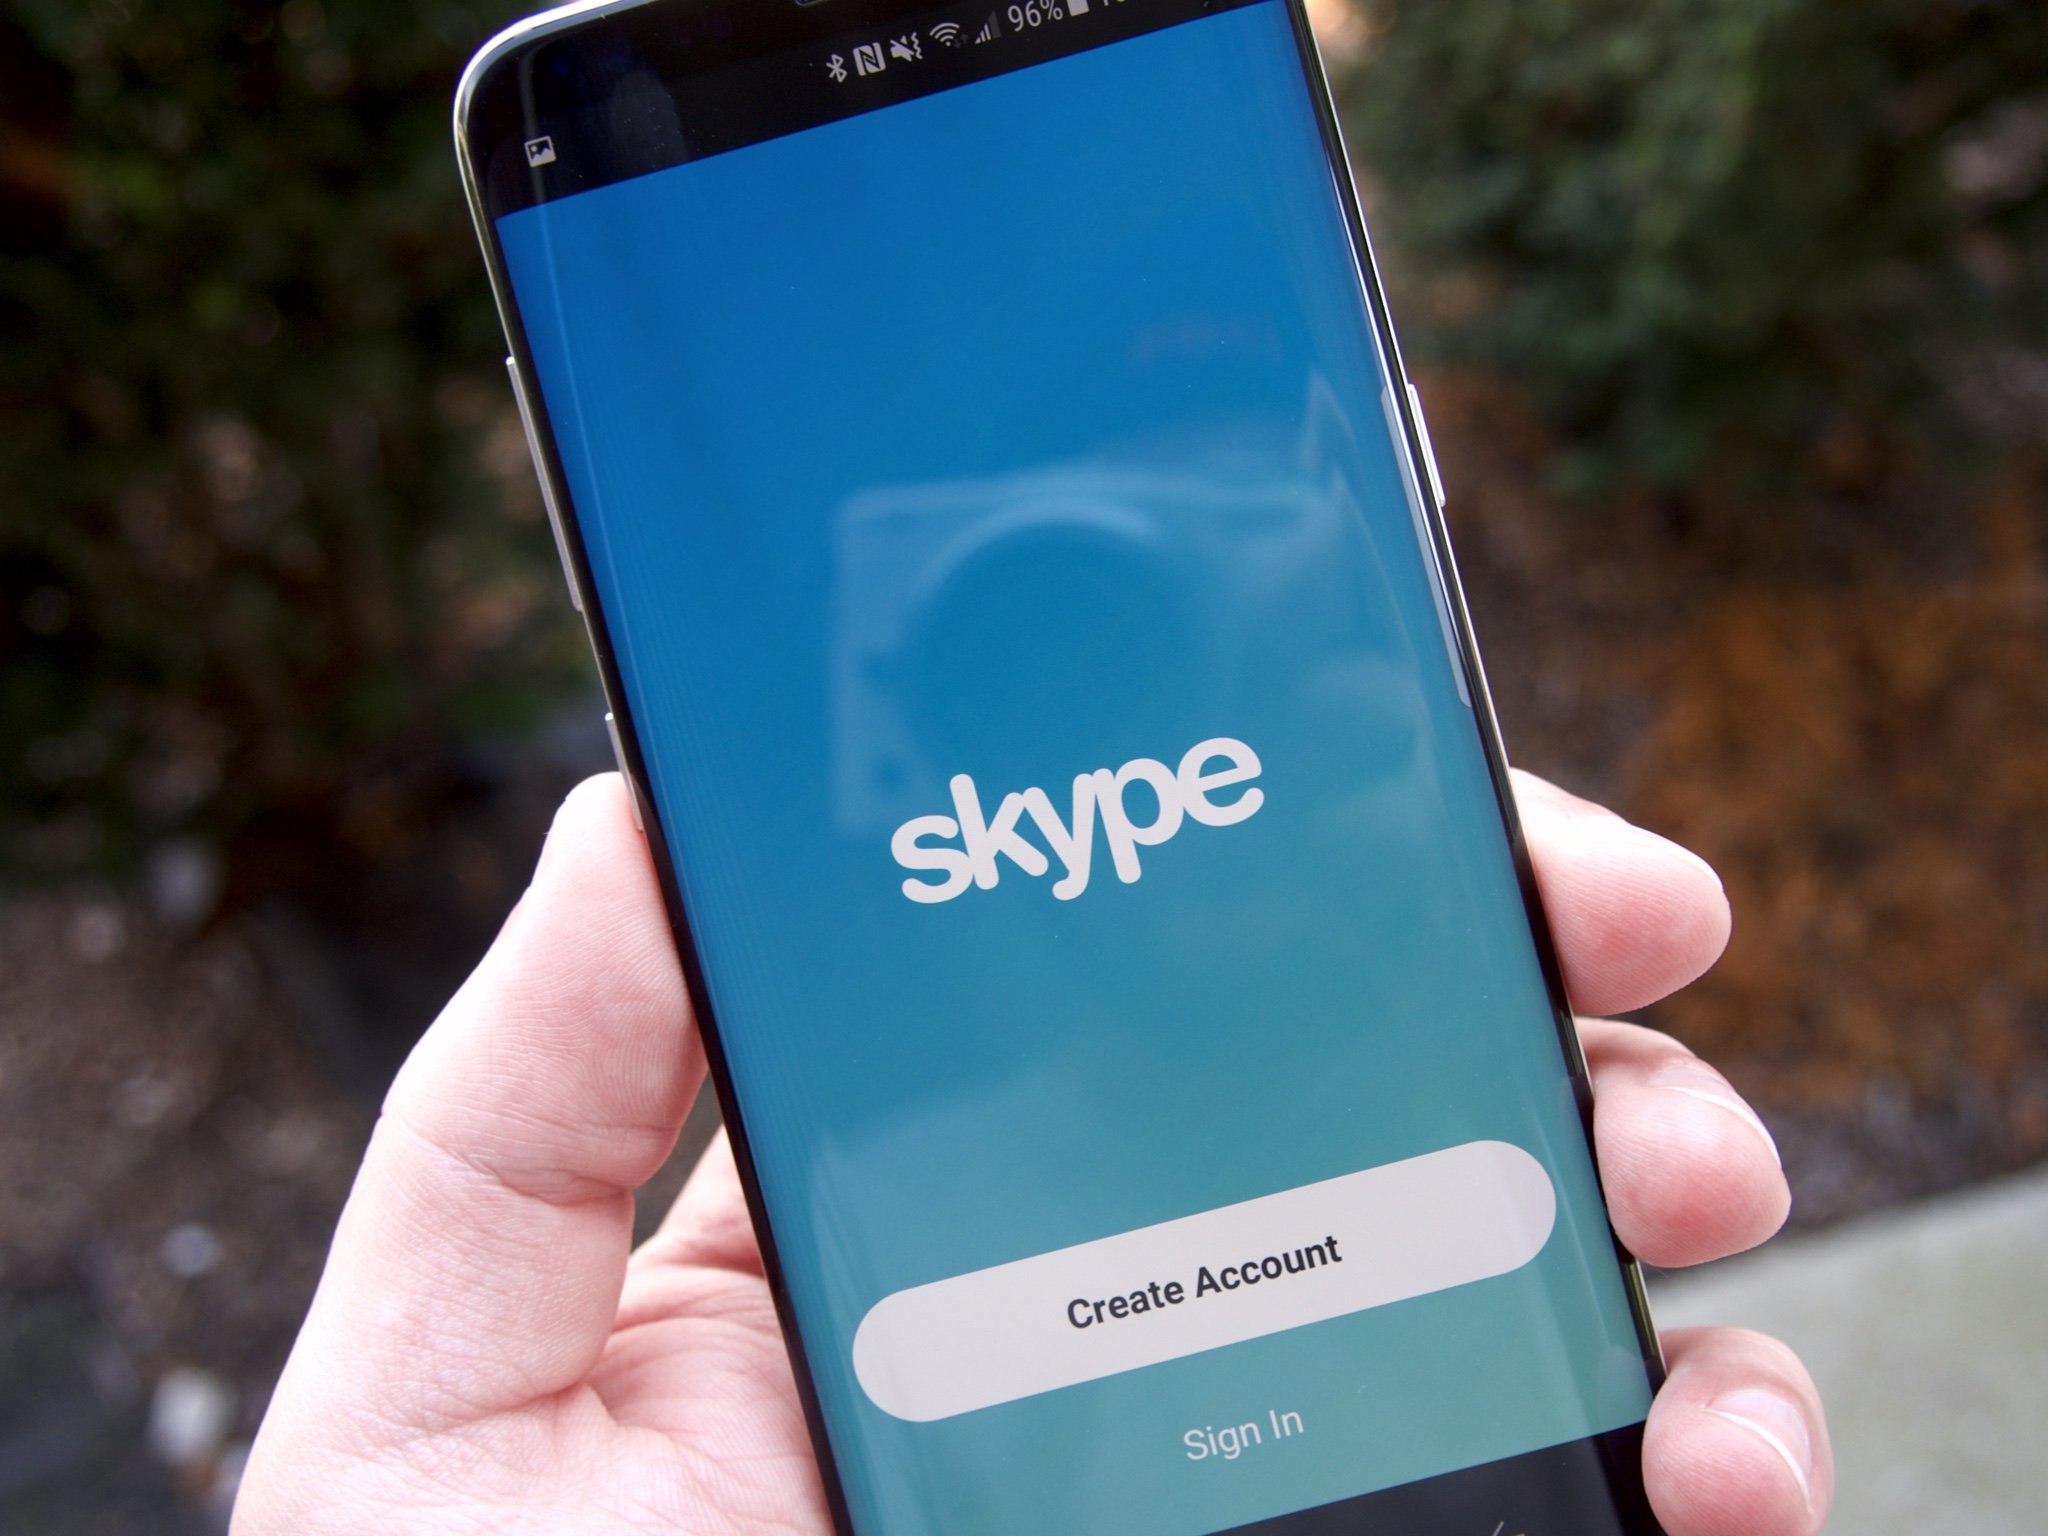 skype-splash-android-gs8-2.jpg